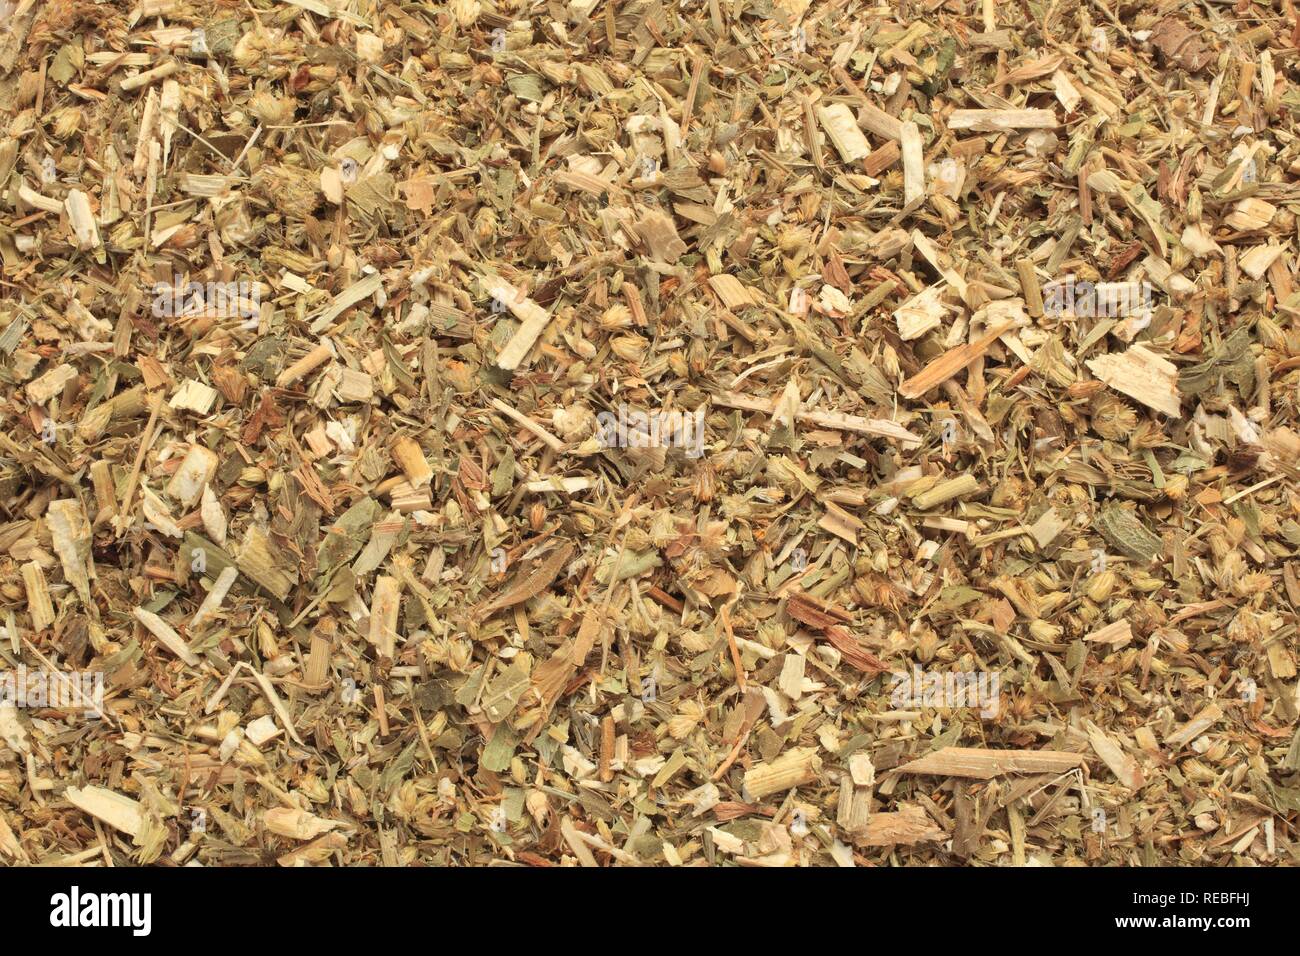 Dried herb of the medicinal plant Golden Rod (Solidago virgaurea) Stock Photo